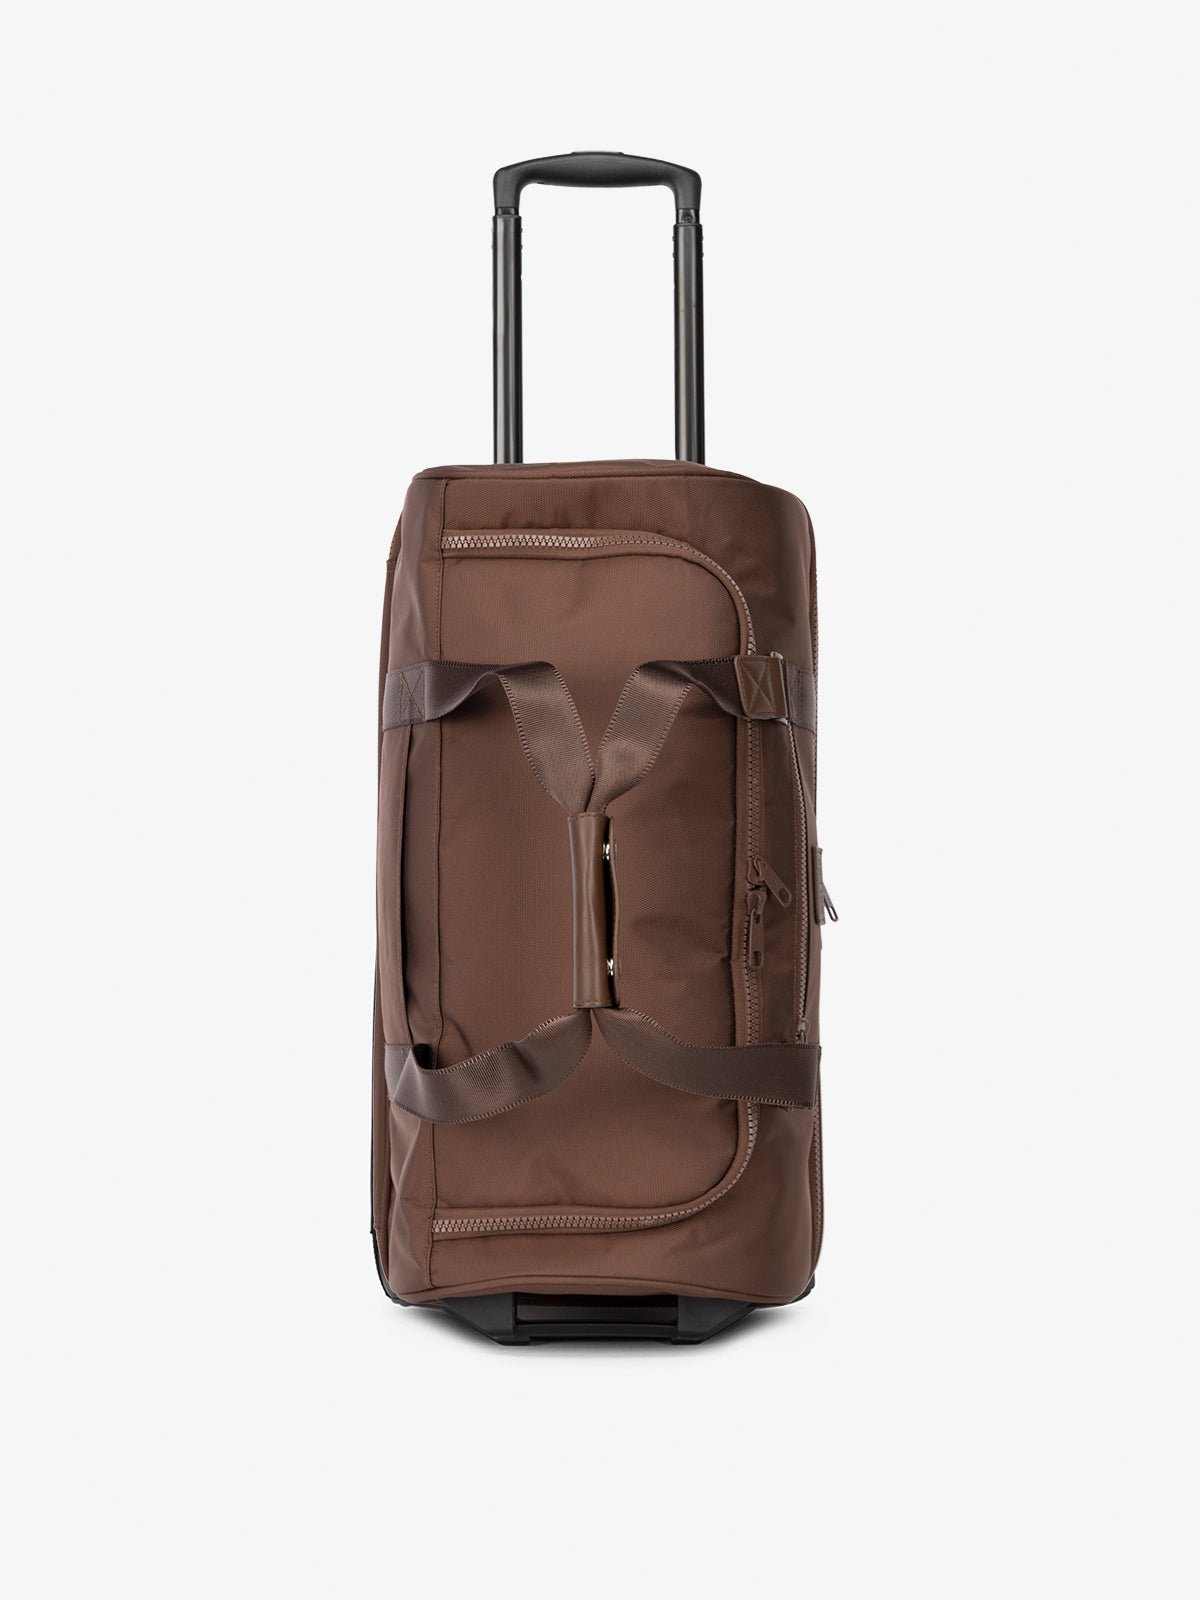 CALPAK Stevyn Rolling Duffle carry-on 22-inch bag in brown